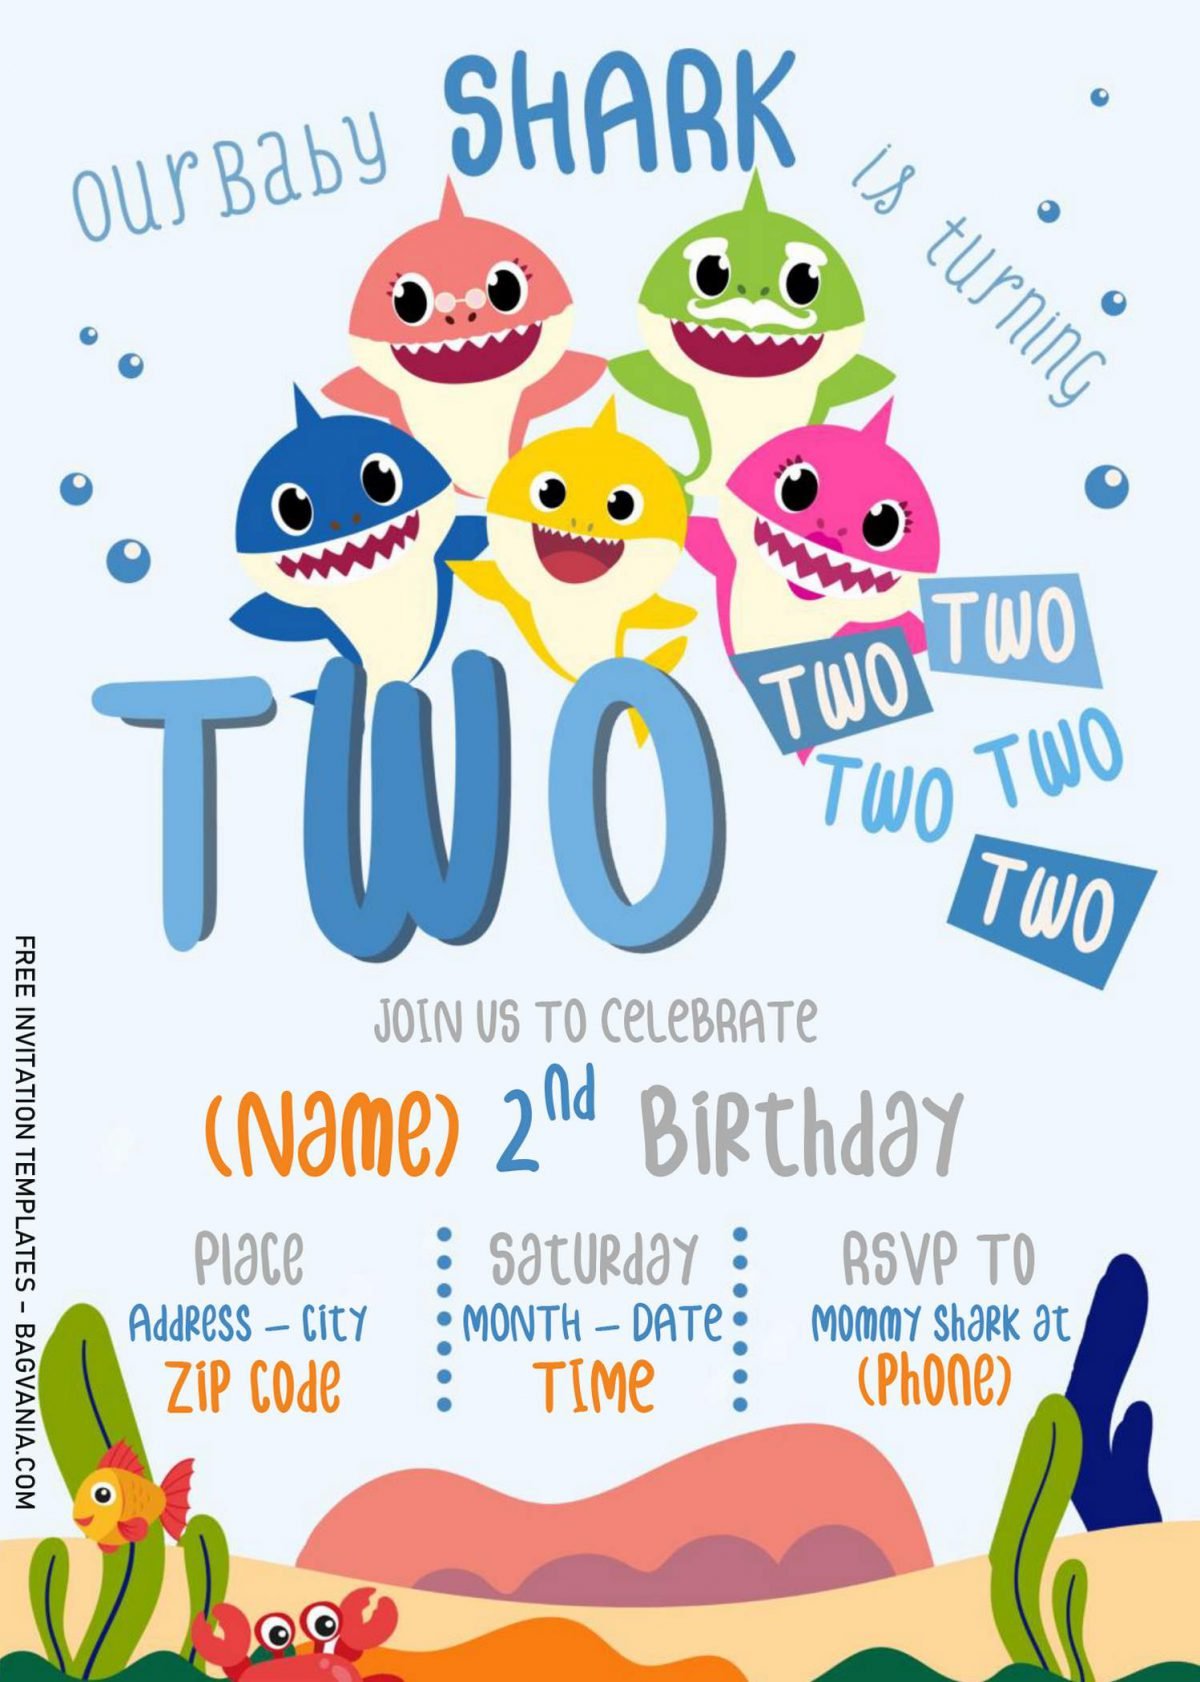 Baby Shark Birthday Invitation Templates - Editable With Microsoft Word and has portrait design